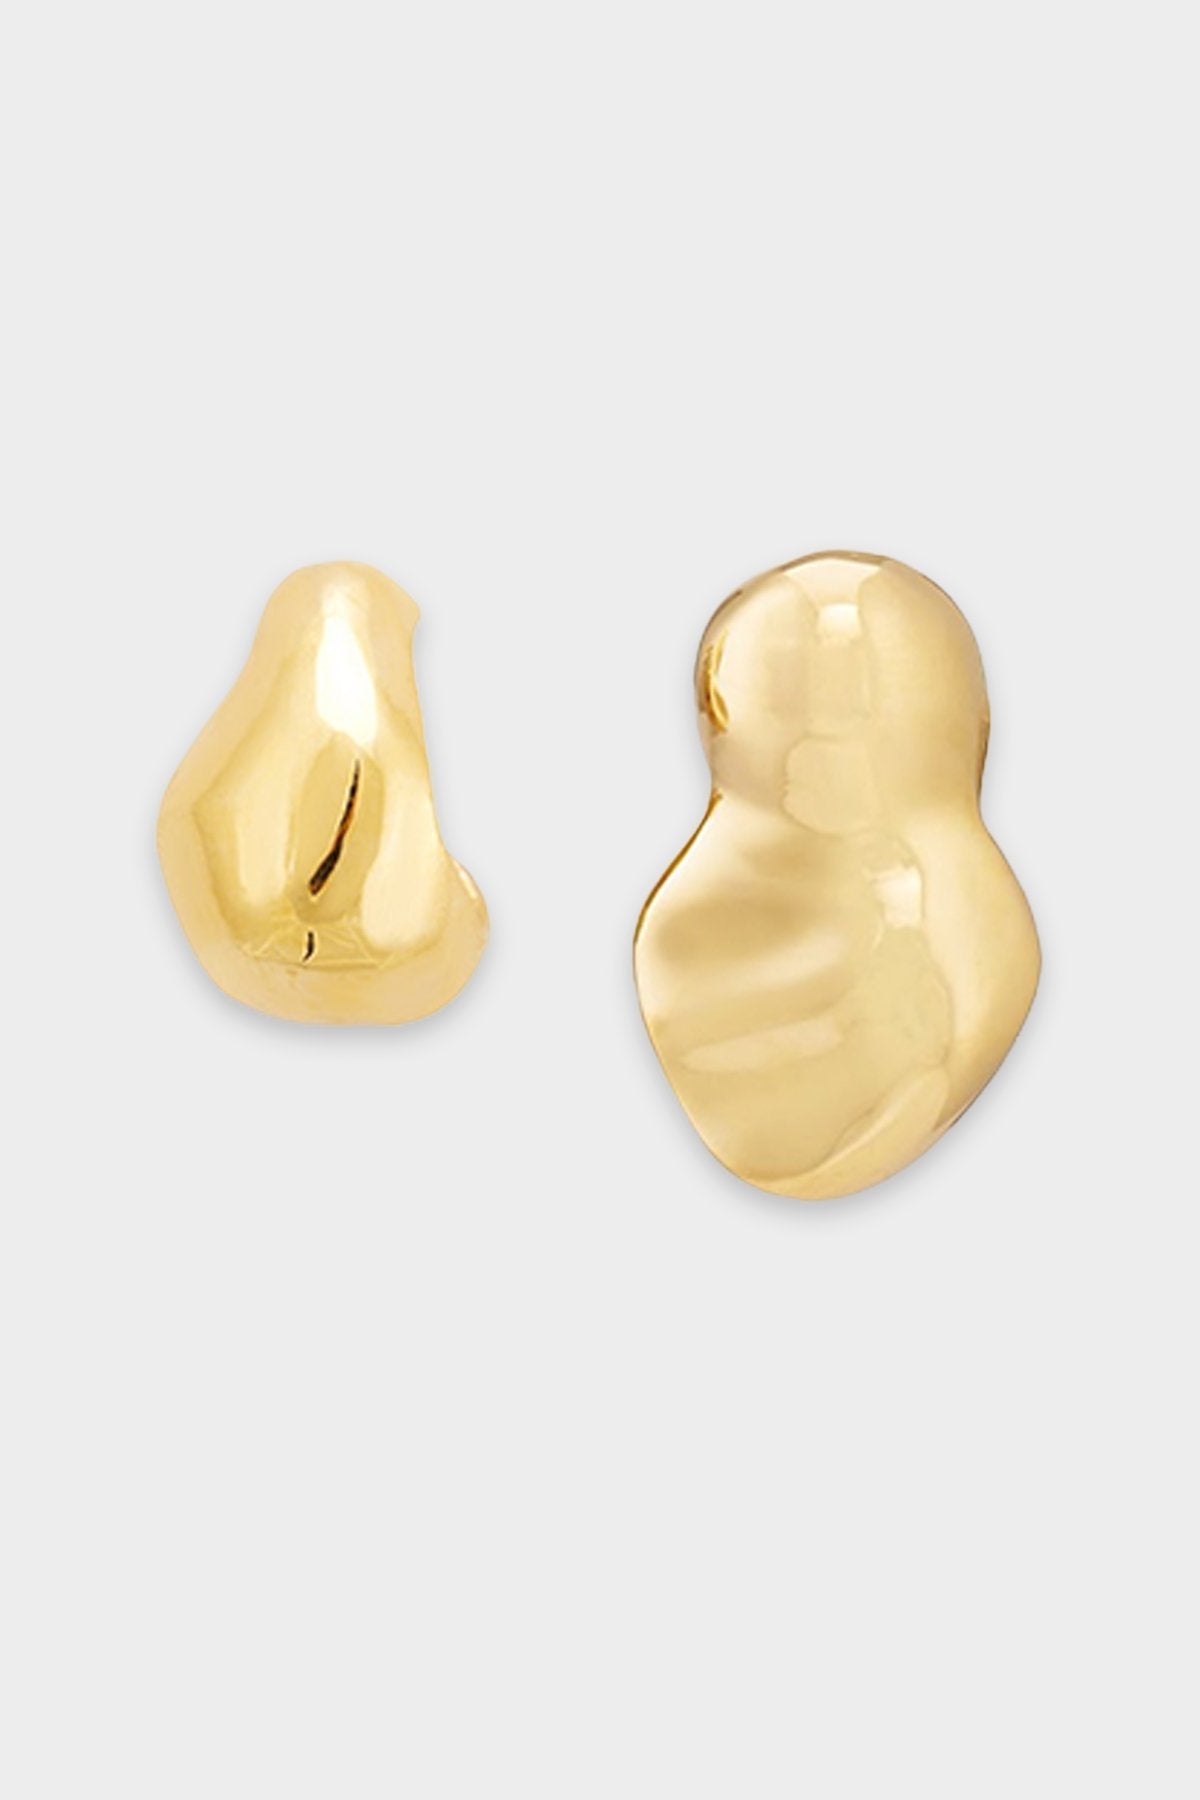 Demeter Mismatched Earrings in Gold - shop-olivia.com